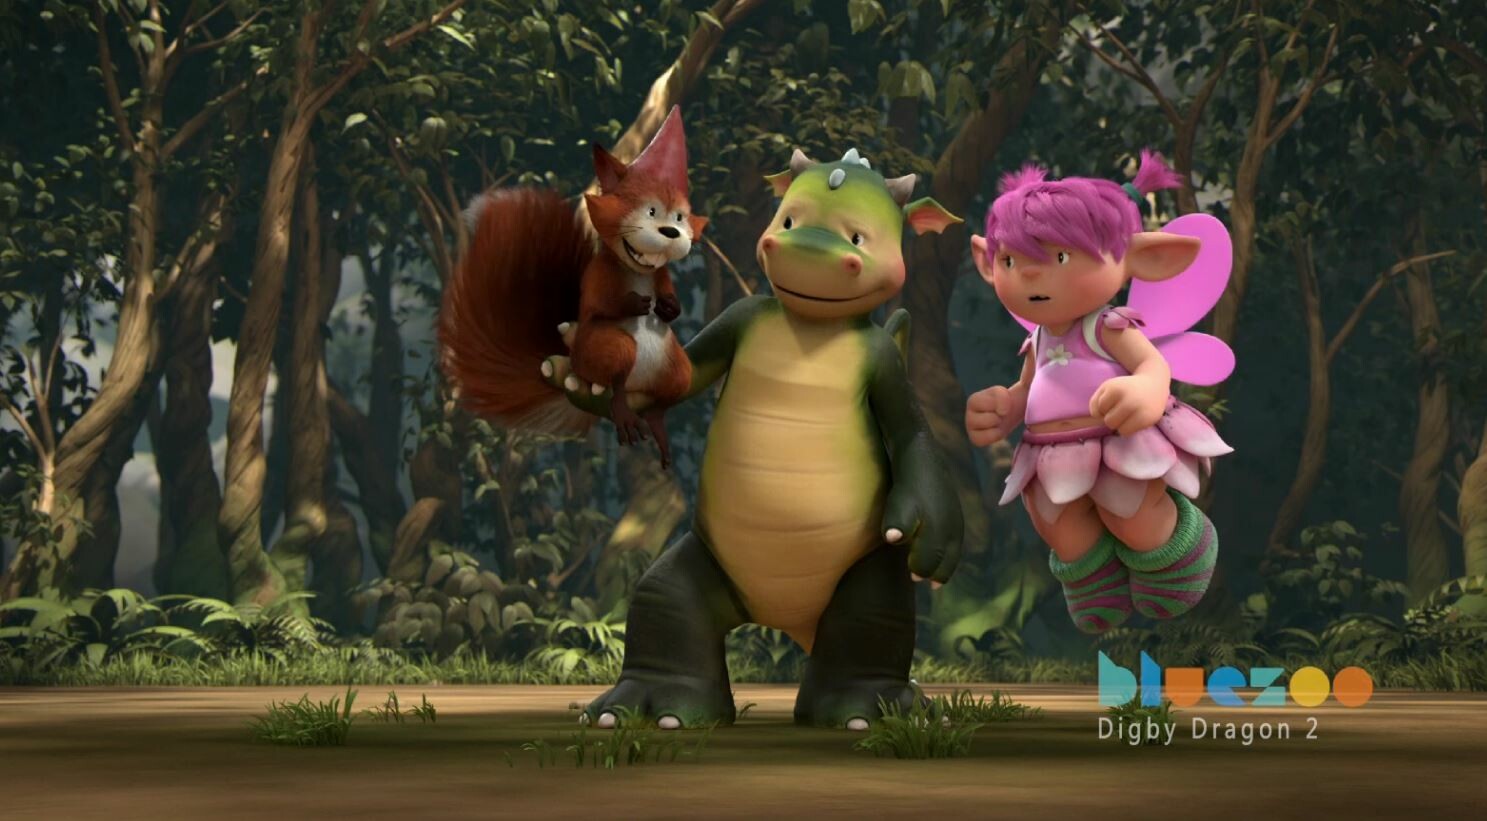 TV Animation Reel: Digby Dragon 2